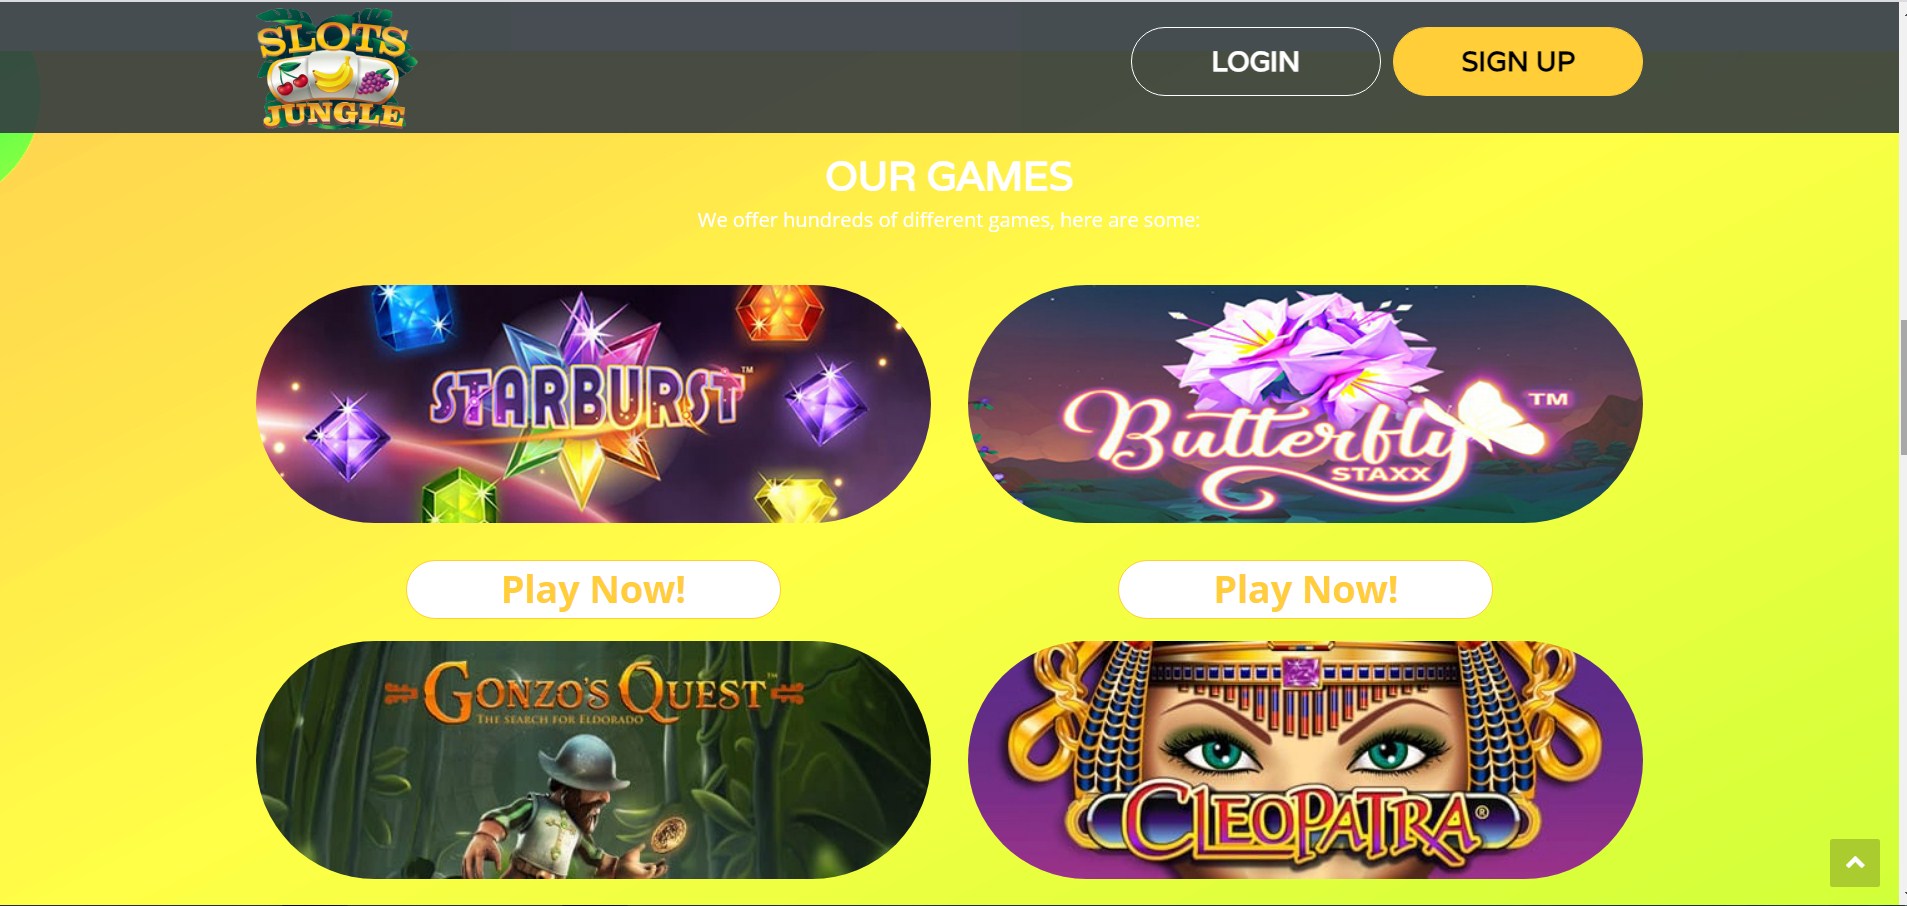 Slots Jungle Casino Games